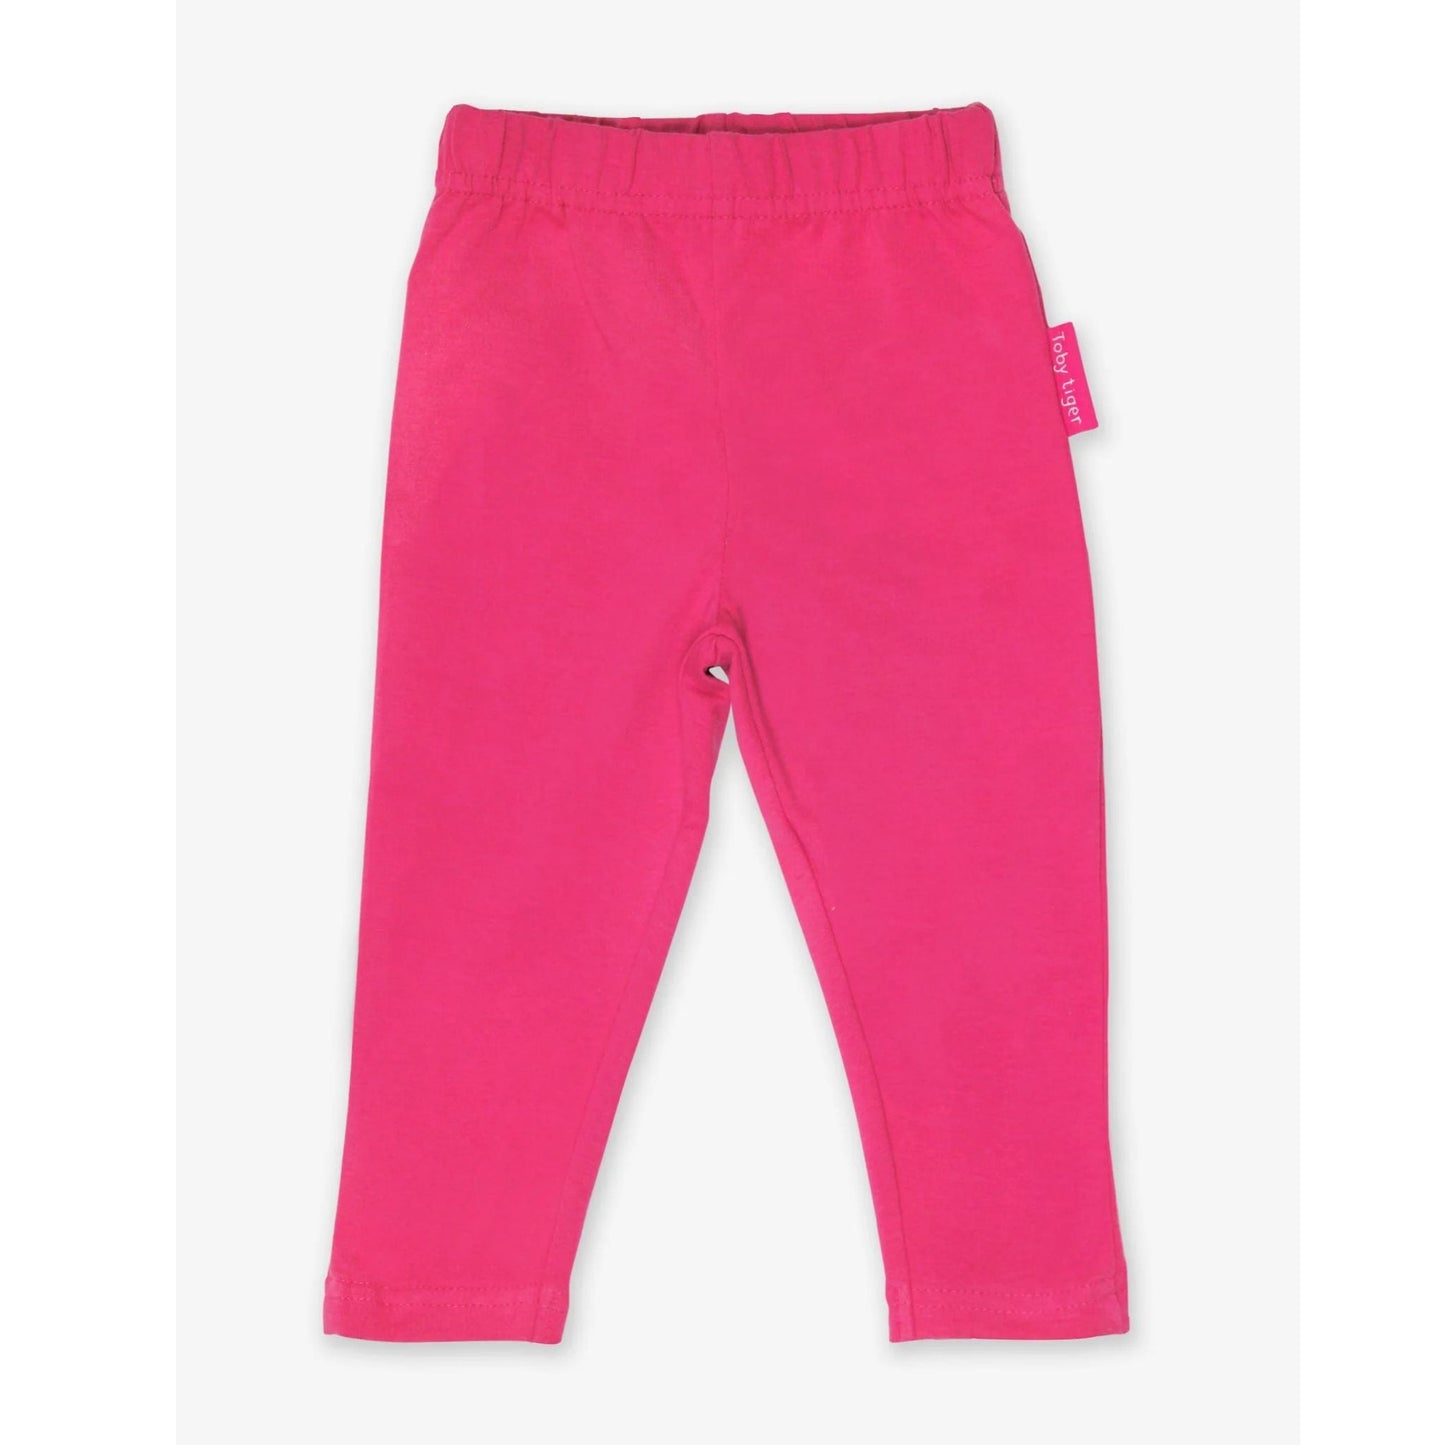 Toby Tiger leggings - pink - sale